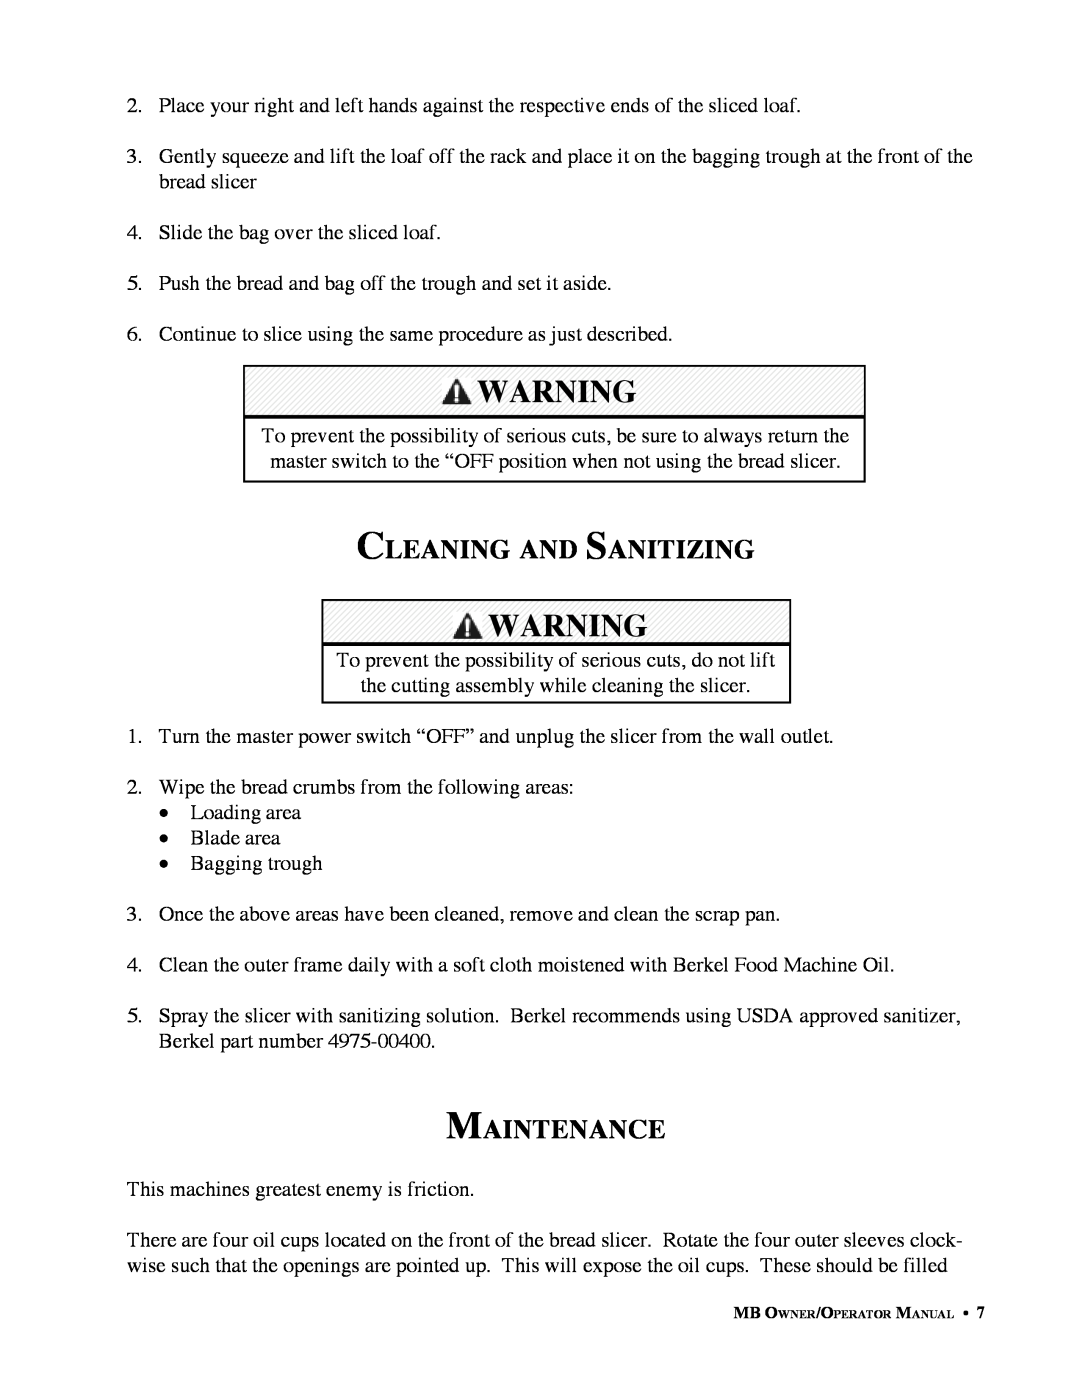 Berkel BK46706 important safety instructions Cleaning And Sanitizing, Maintenance 